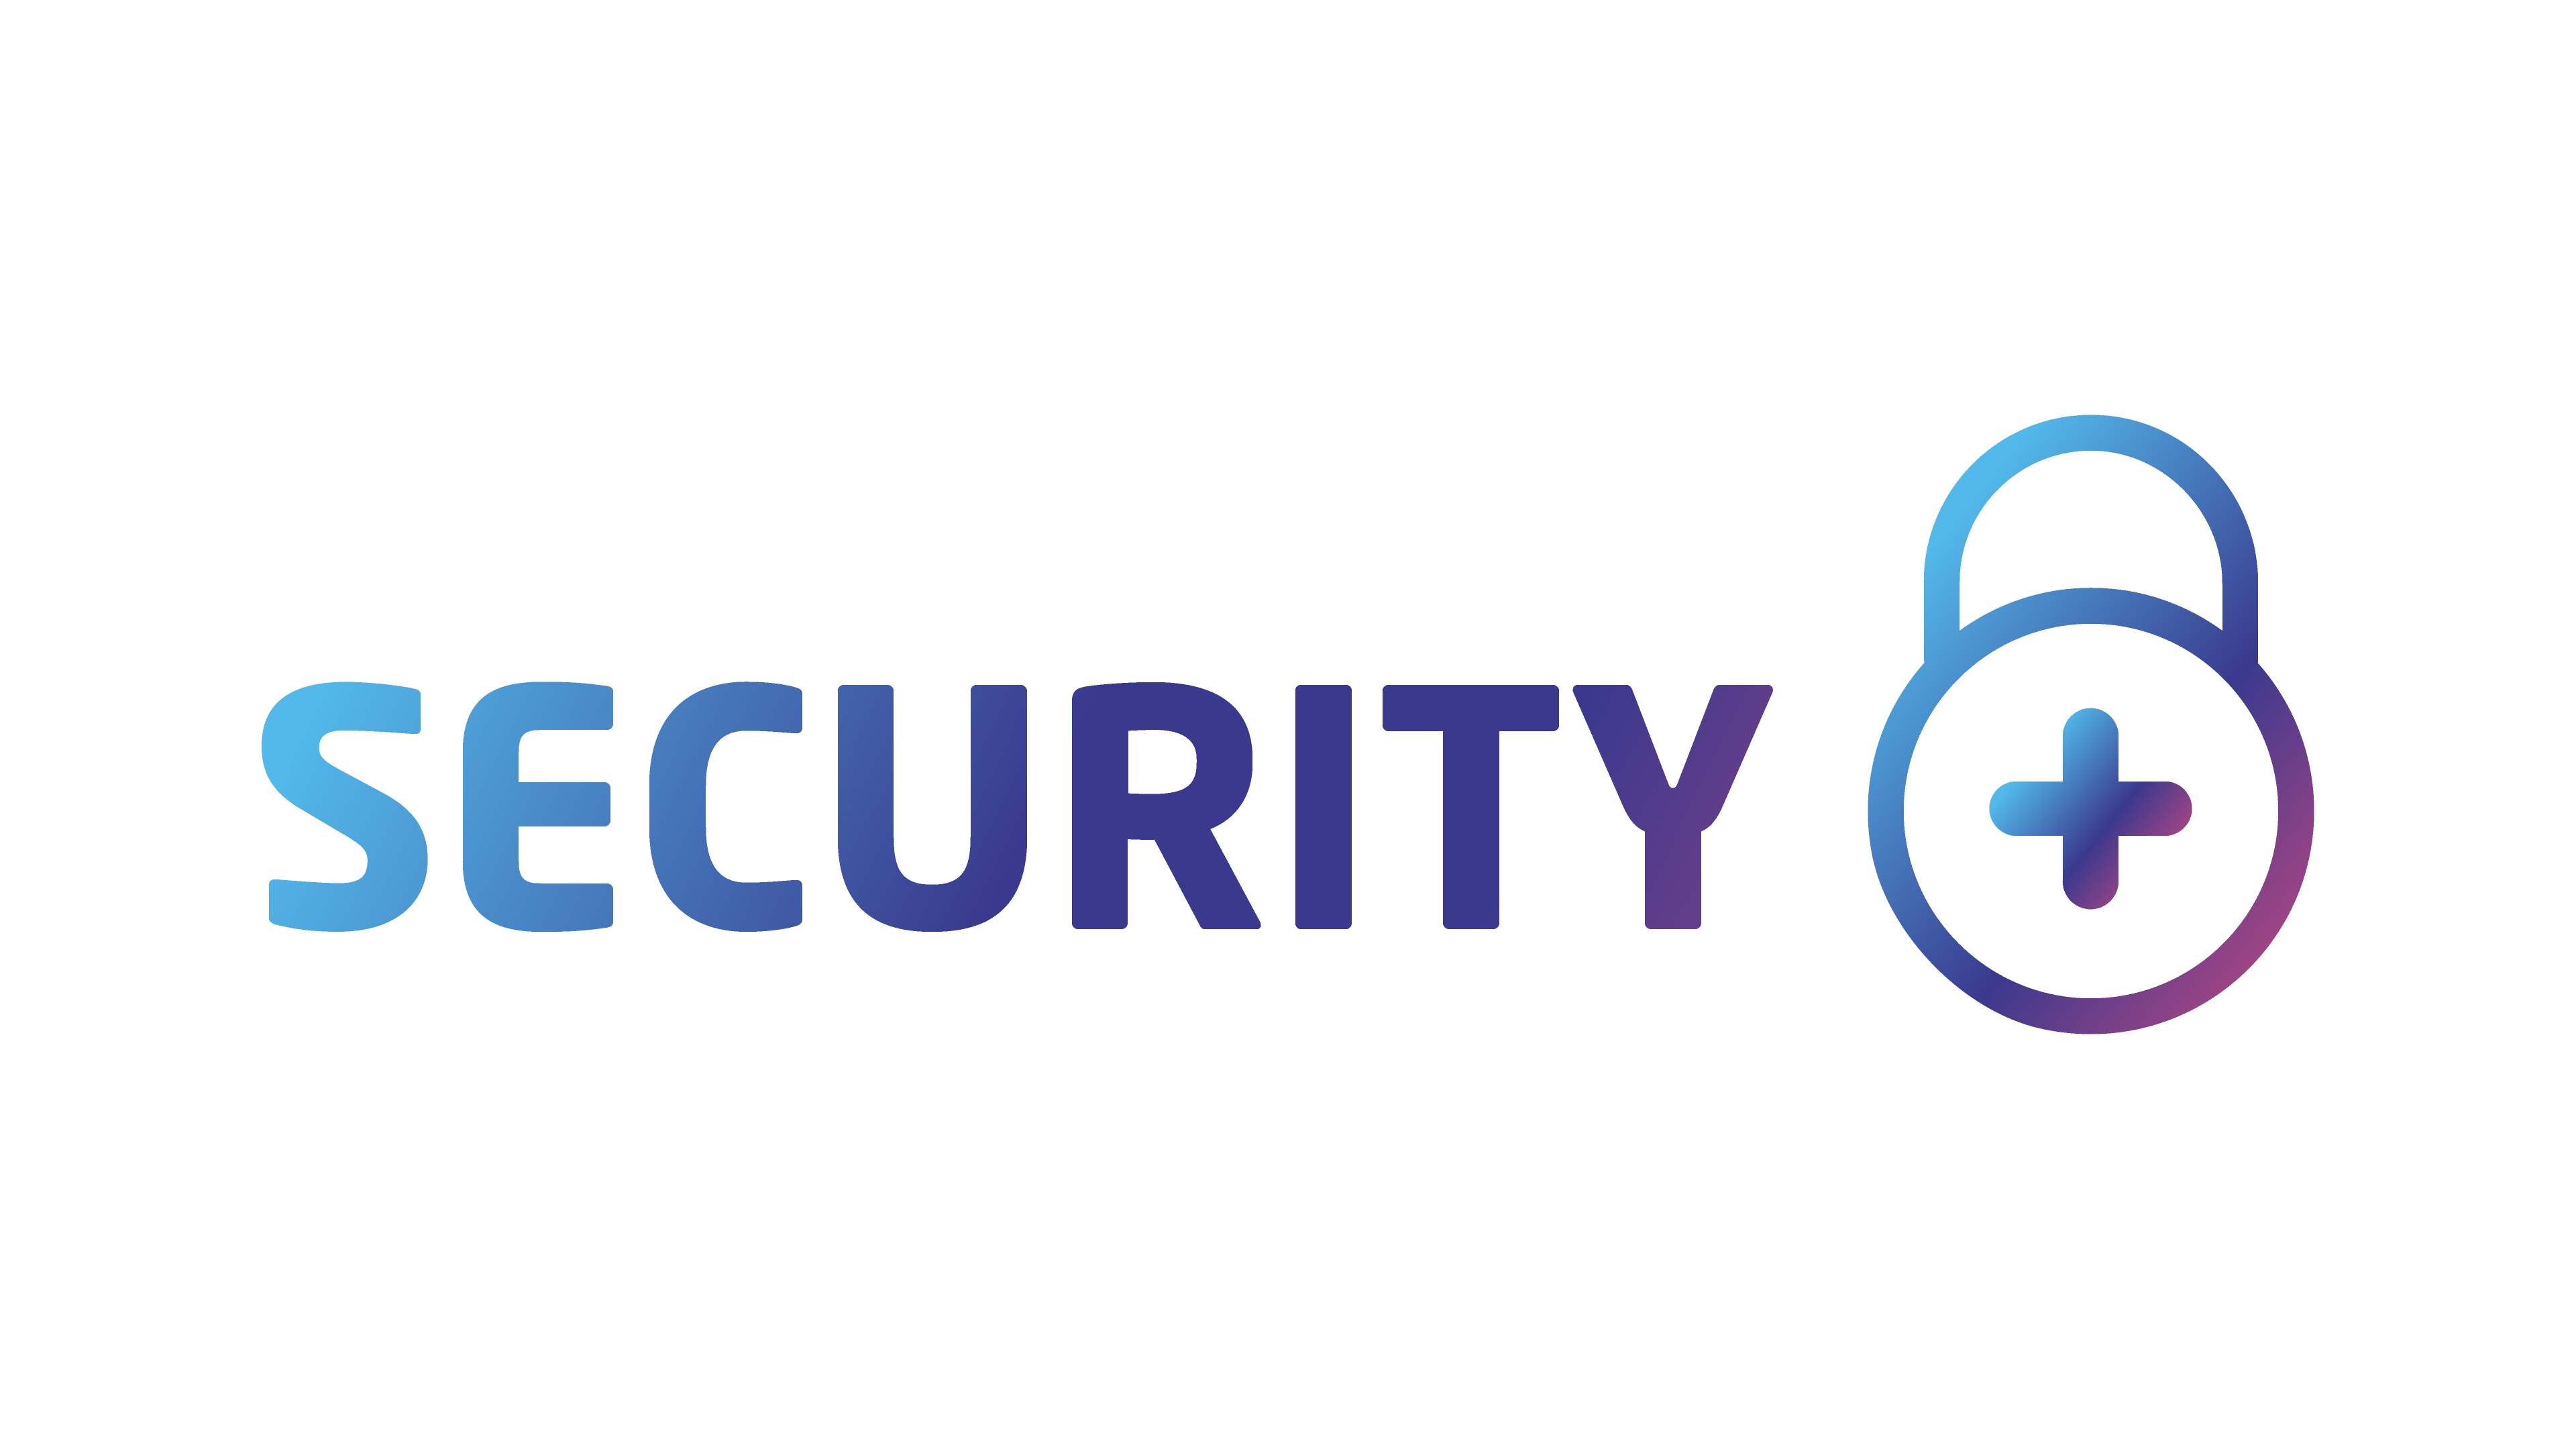 Security+